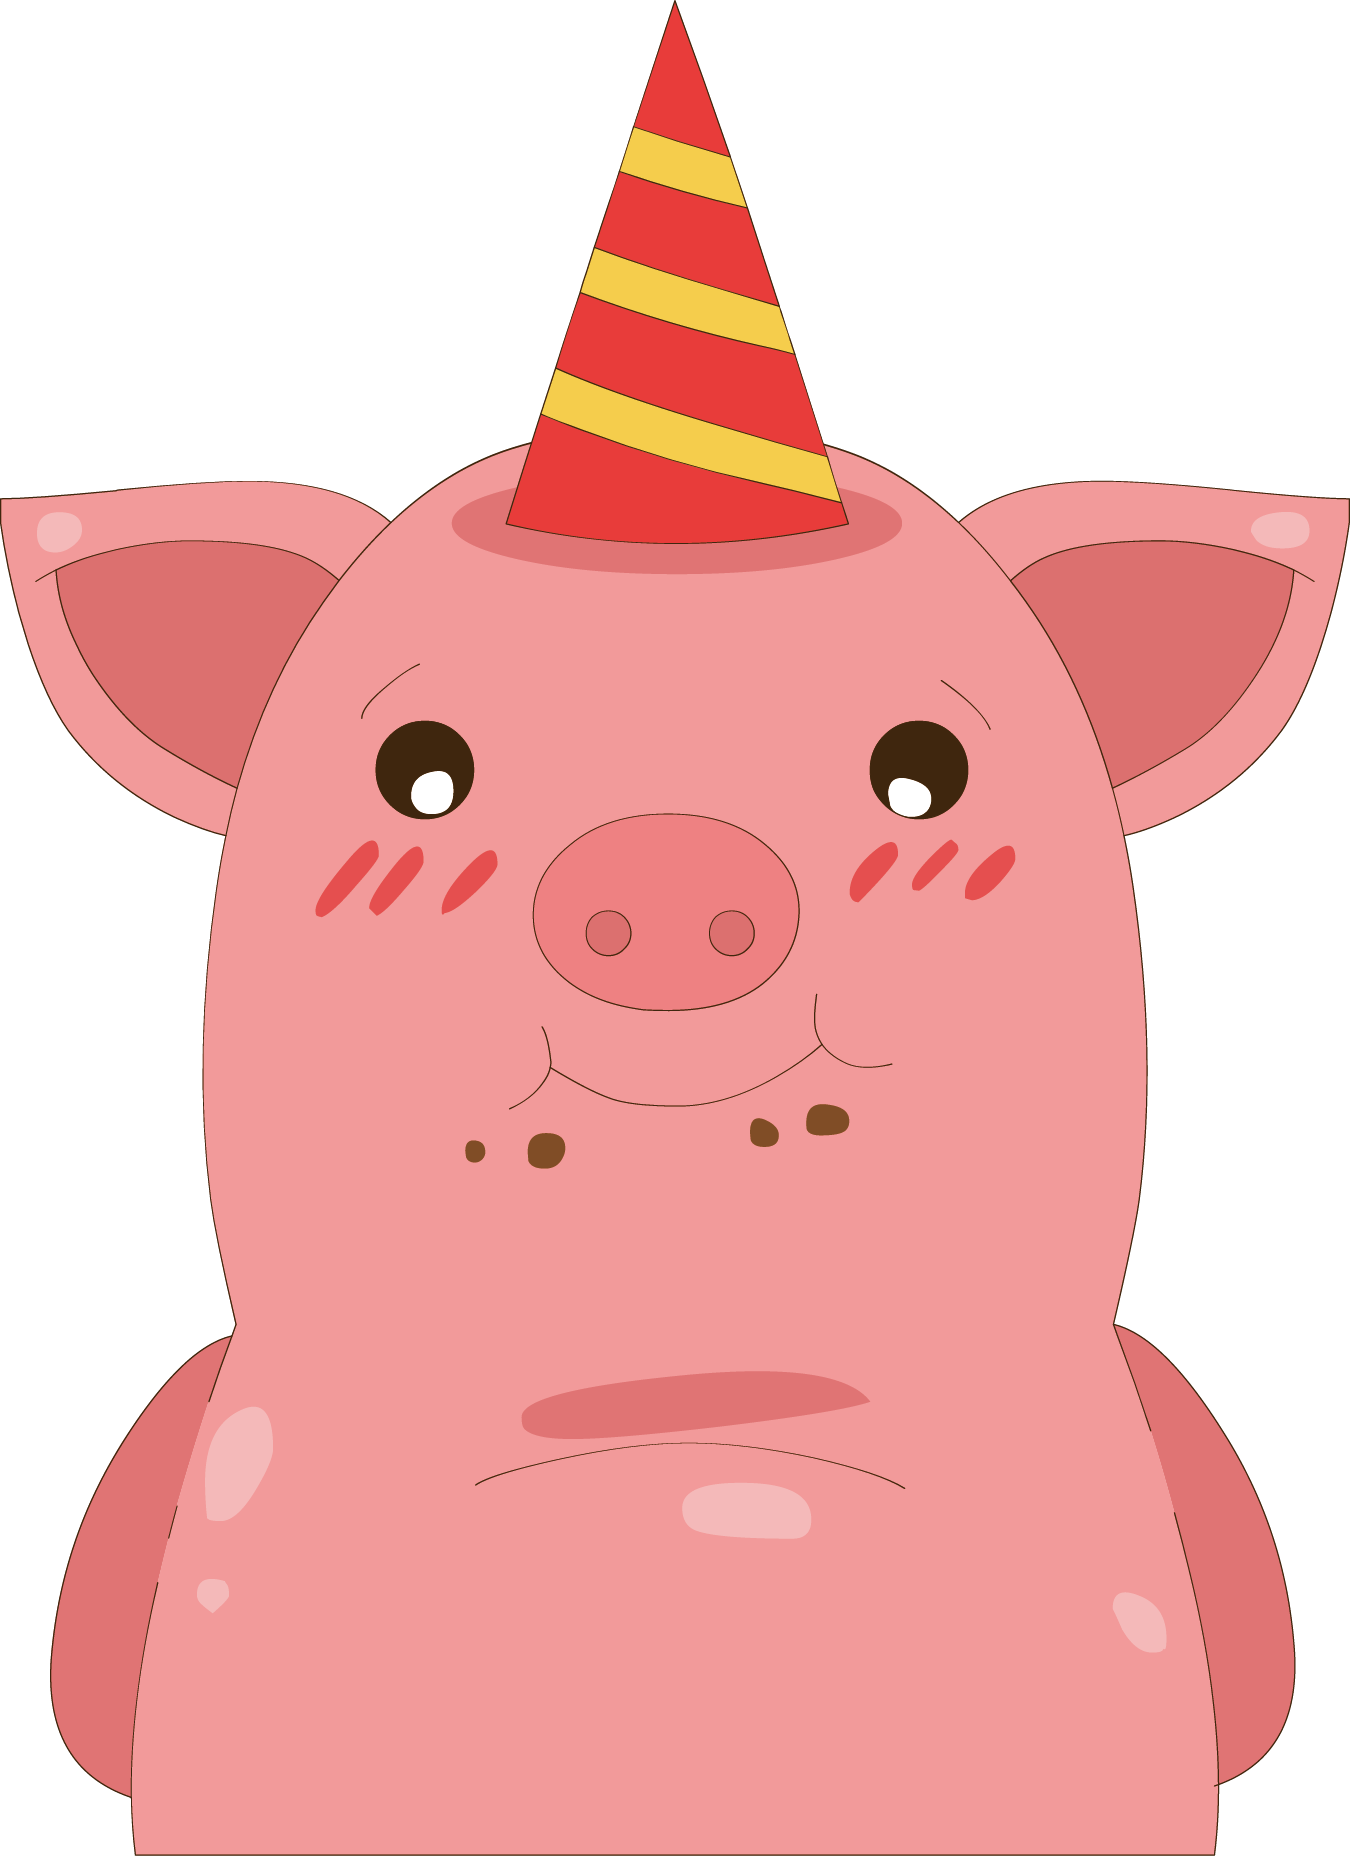 Domestic Pig Party Hat Snout Cartoon Illustration - Pig (1350x1856)